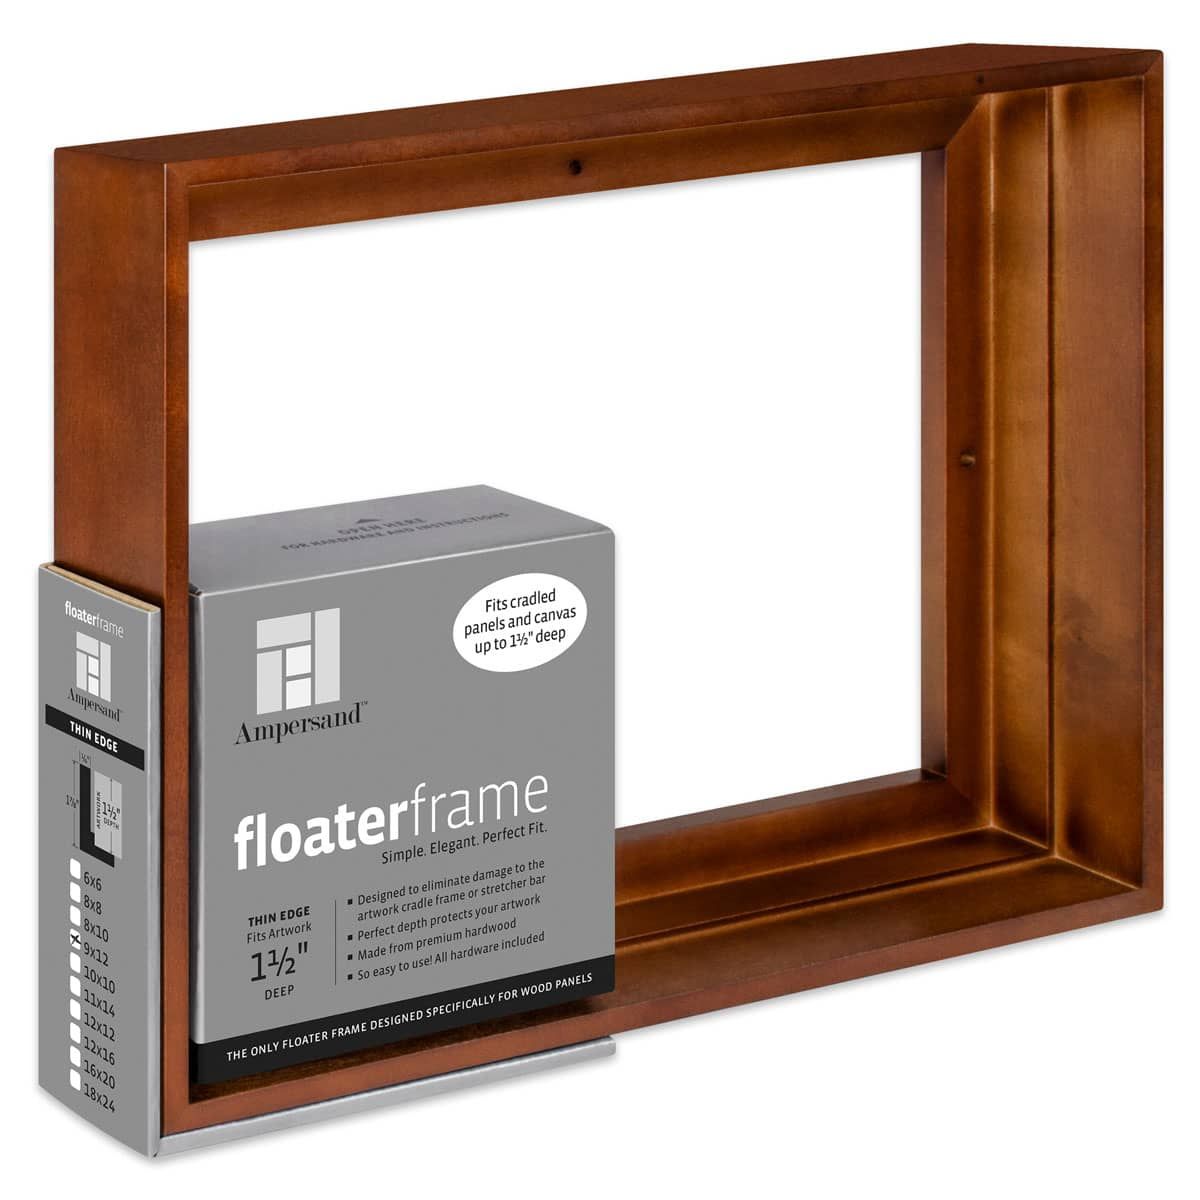 12x16 Floater Frame 